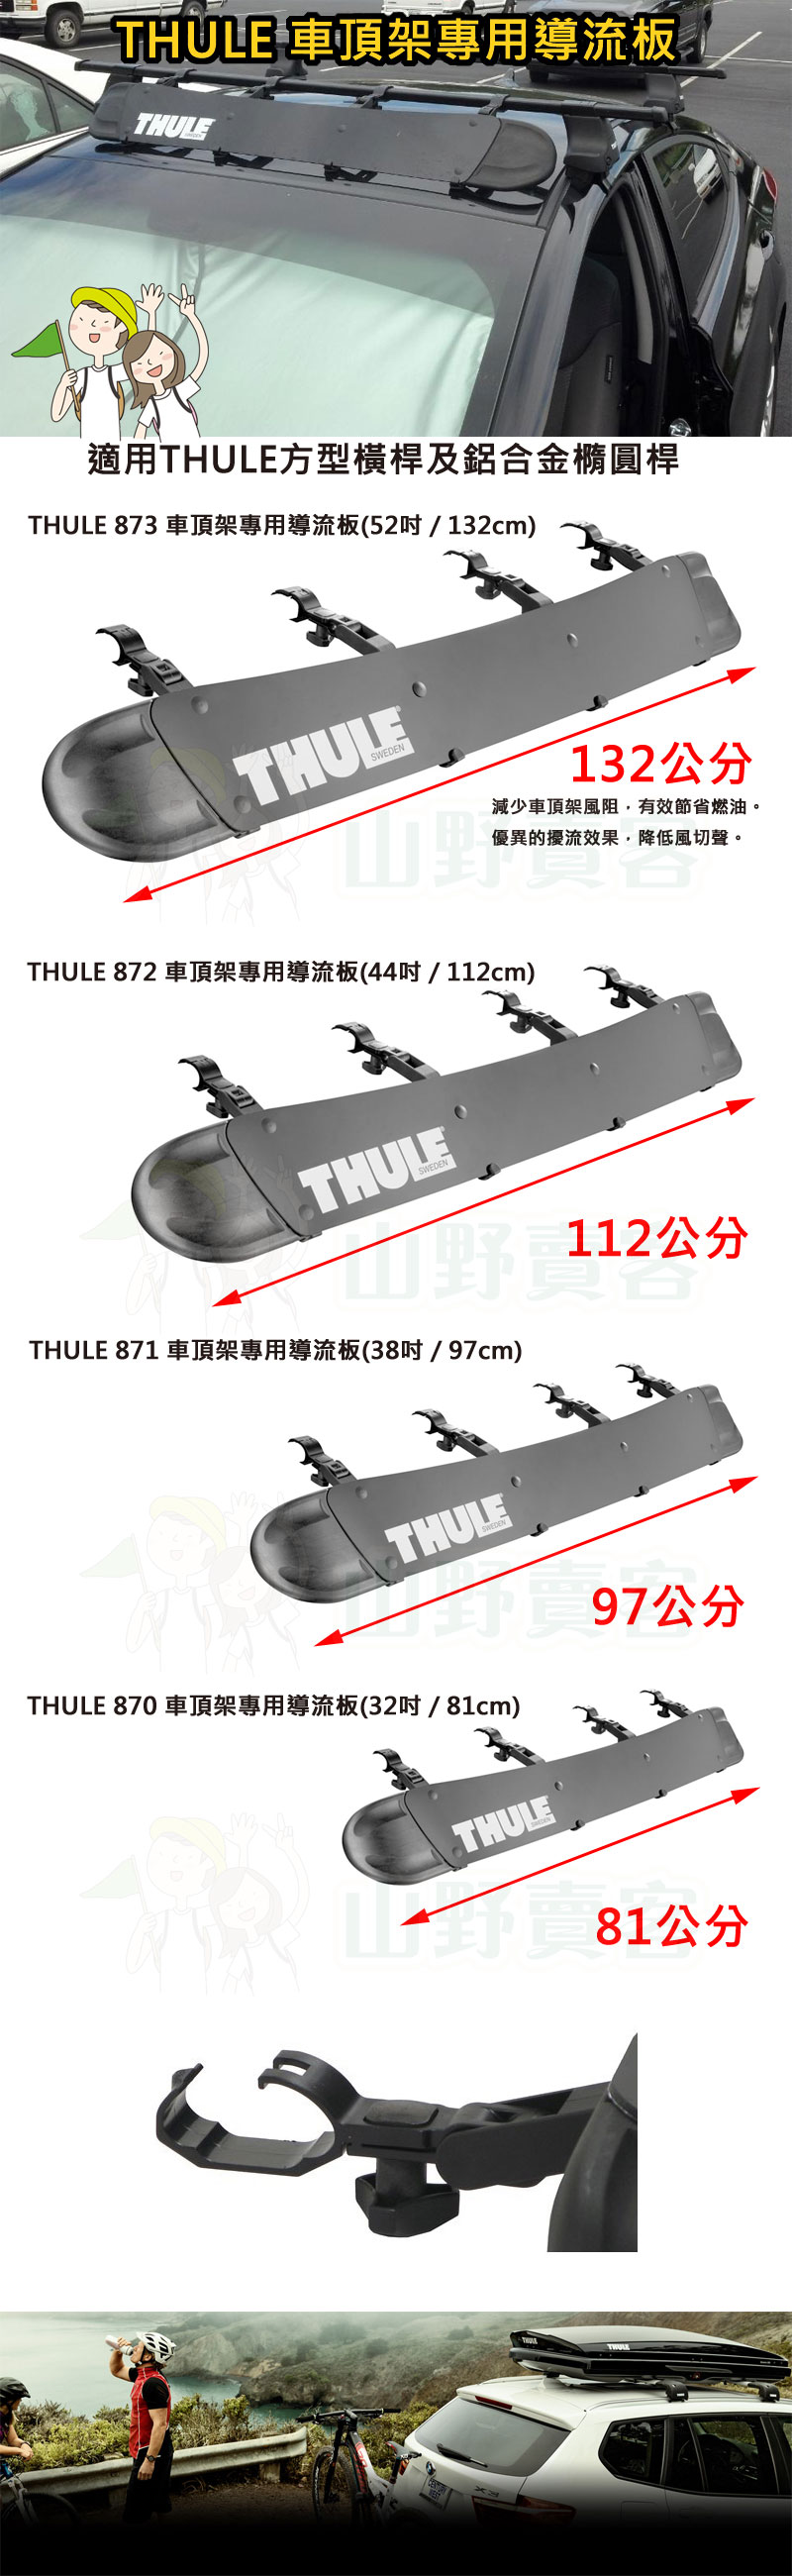 Thule 873 都樂 USA-873XT 52吋 132cm 擾流板